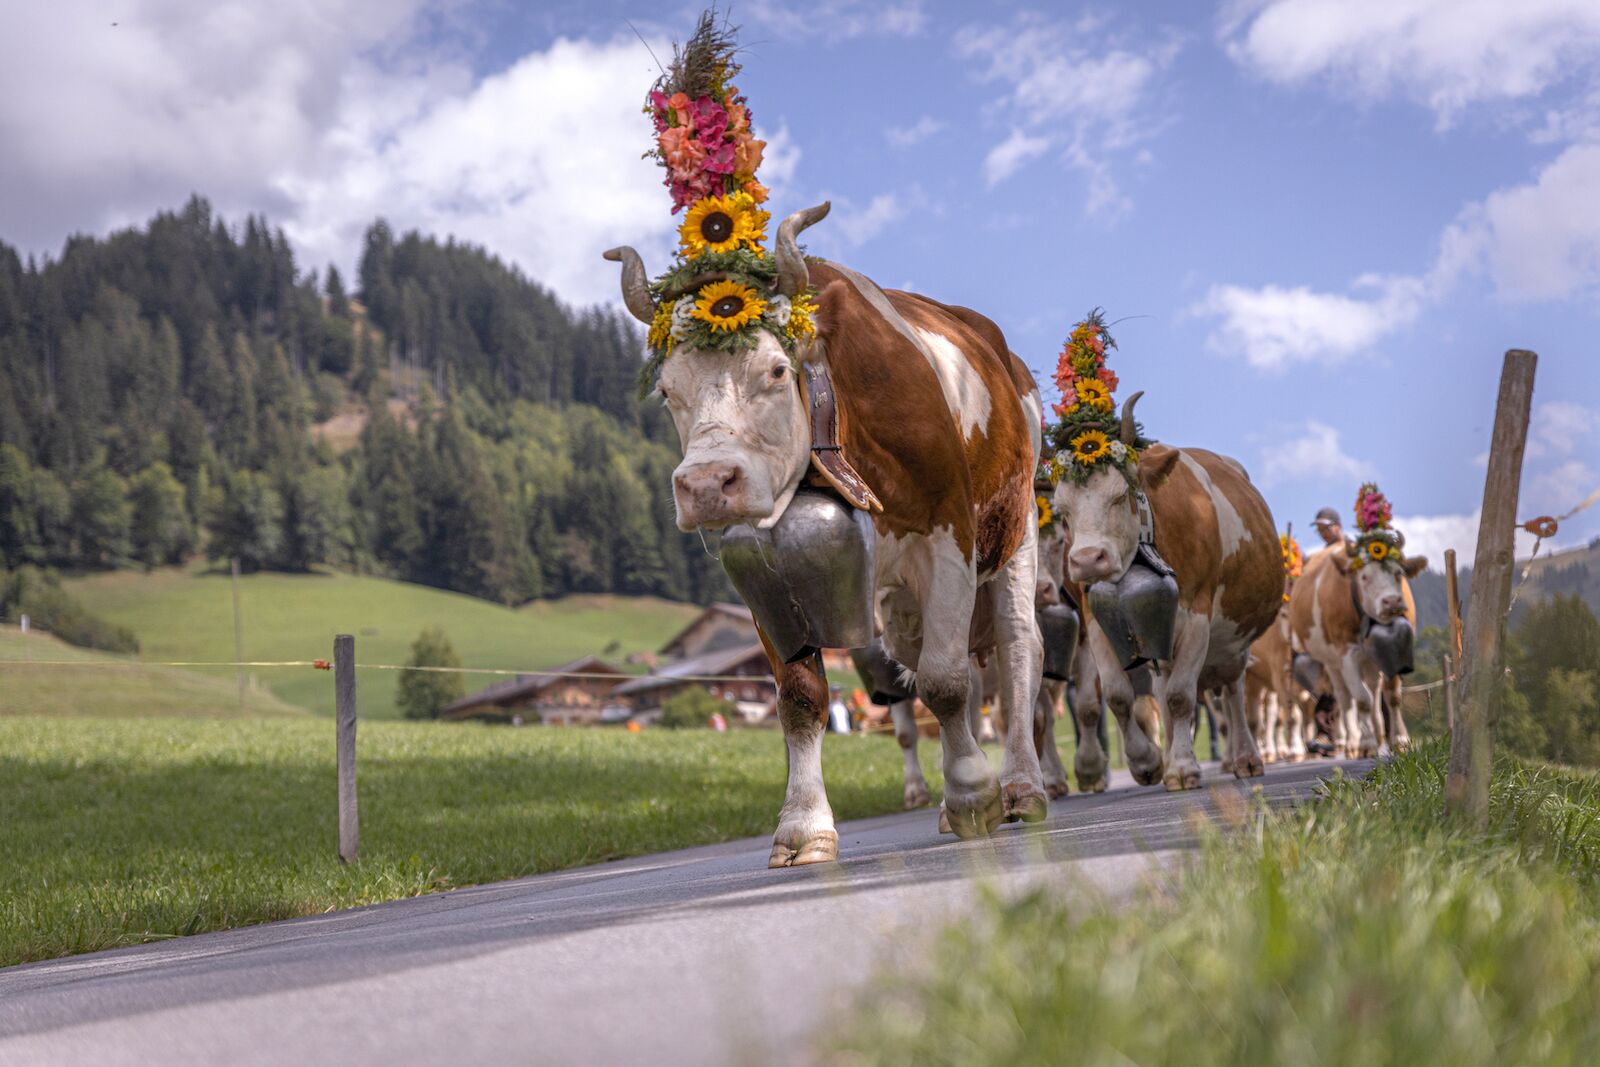 Cows Wearing Cow Bells Looking Sideways, Swiss Alps, Switzerland